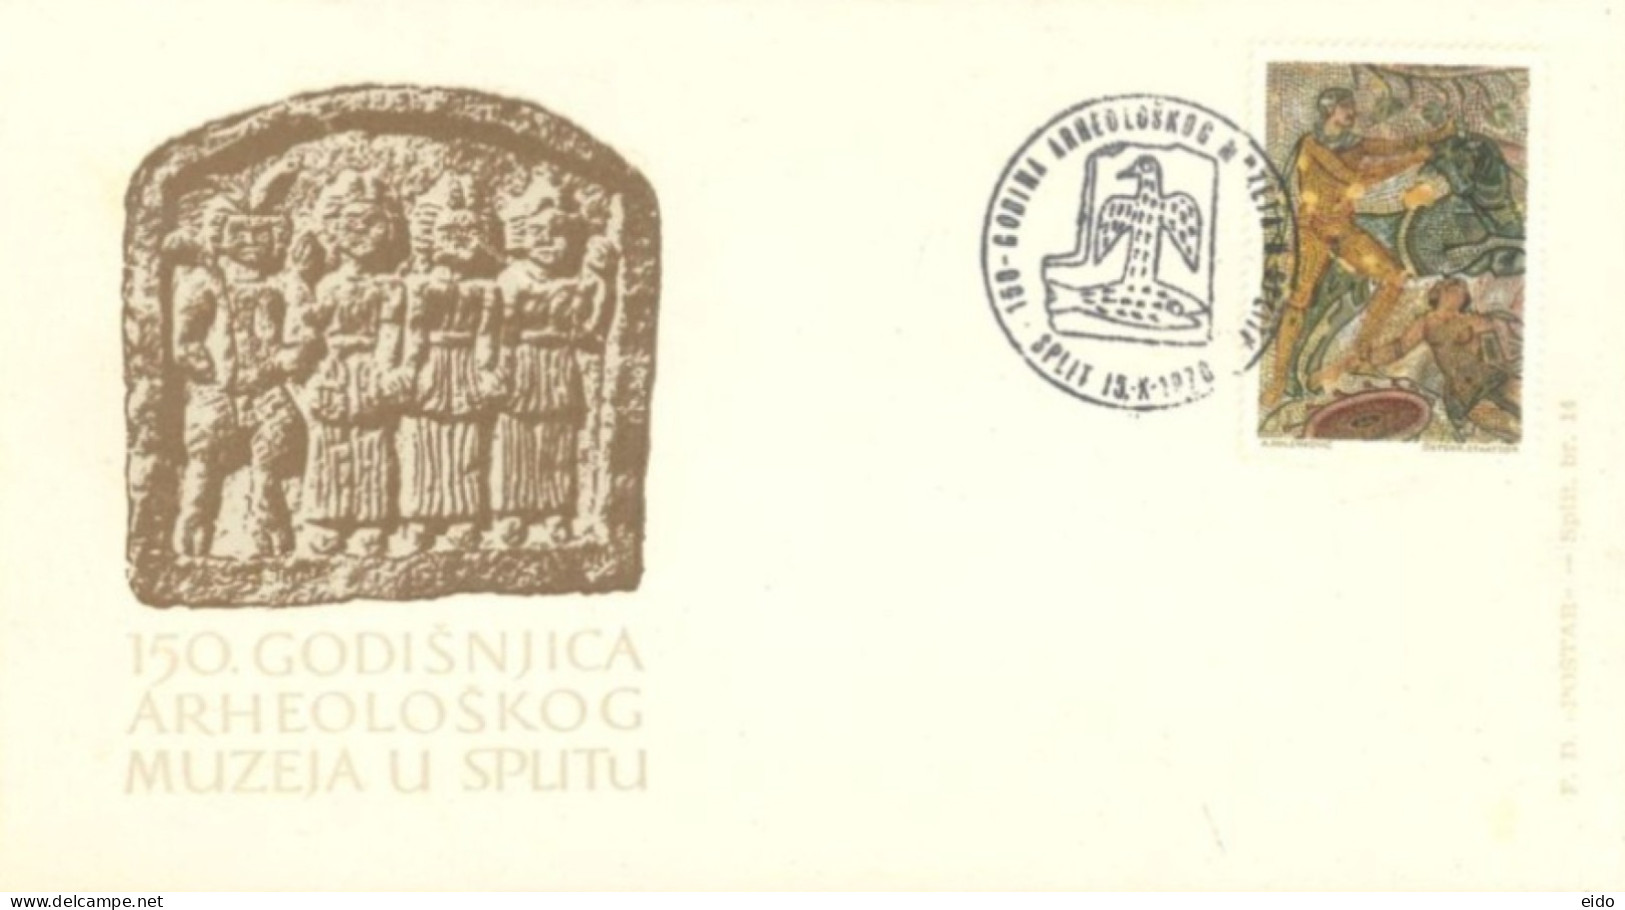 YUGOSLAVIA  - 1970, FDC STAMP OF150 GODINKA  ARCHAEOLOGICAL MUSEUM OF SPLIT WITH DESCRIPTION LEAFLET. - Briefe U. Dokumente